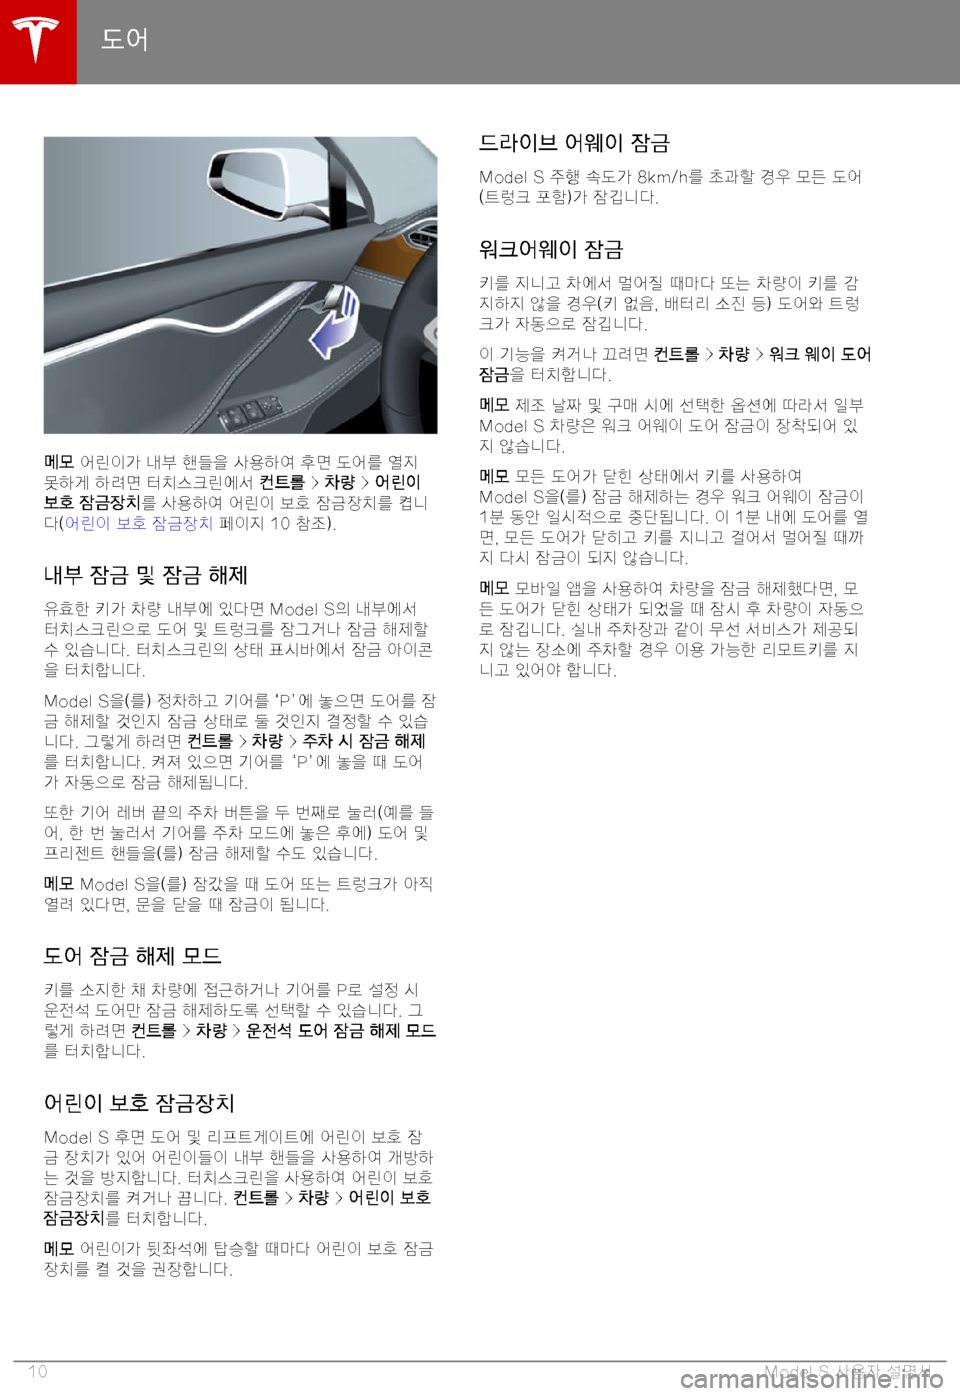 TESLA MODEL S 2019  사용자 가이드 (in Korean) 0q0